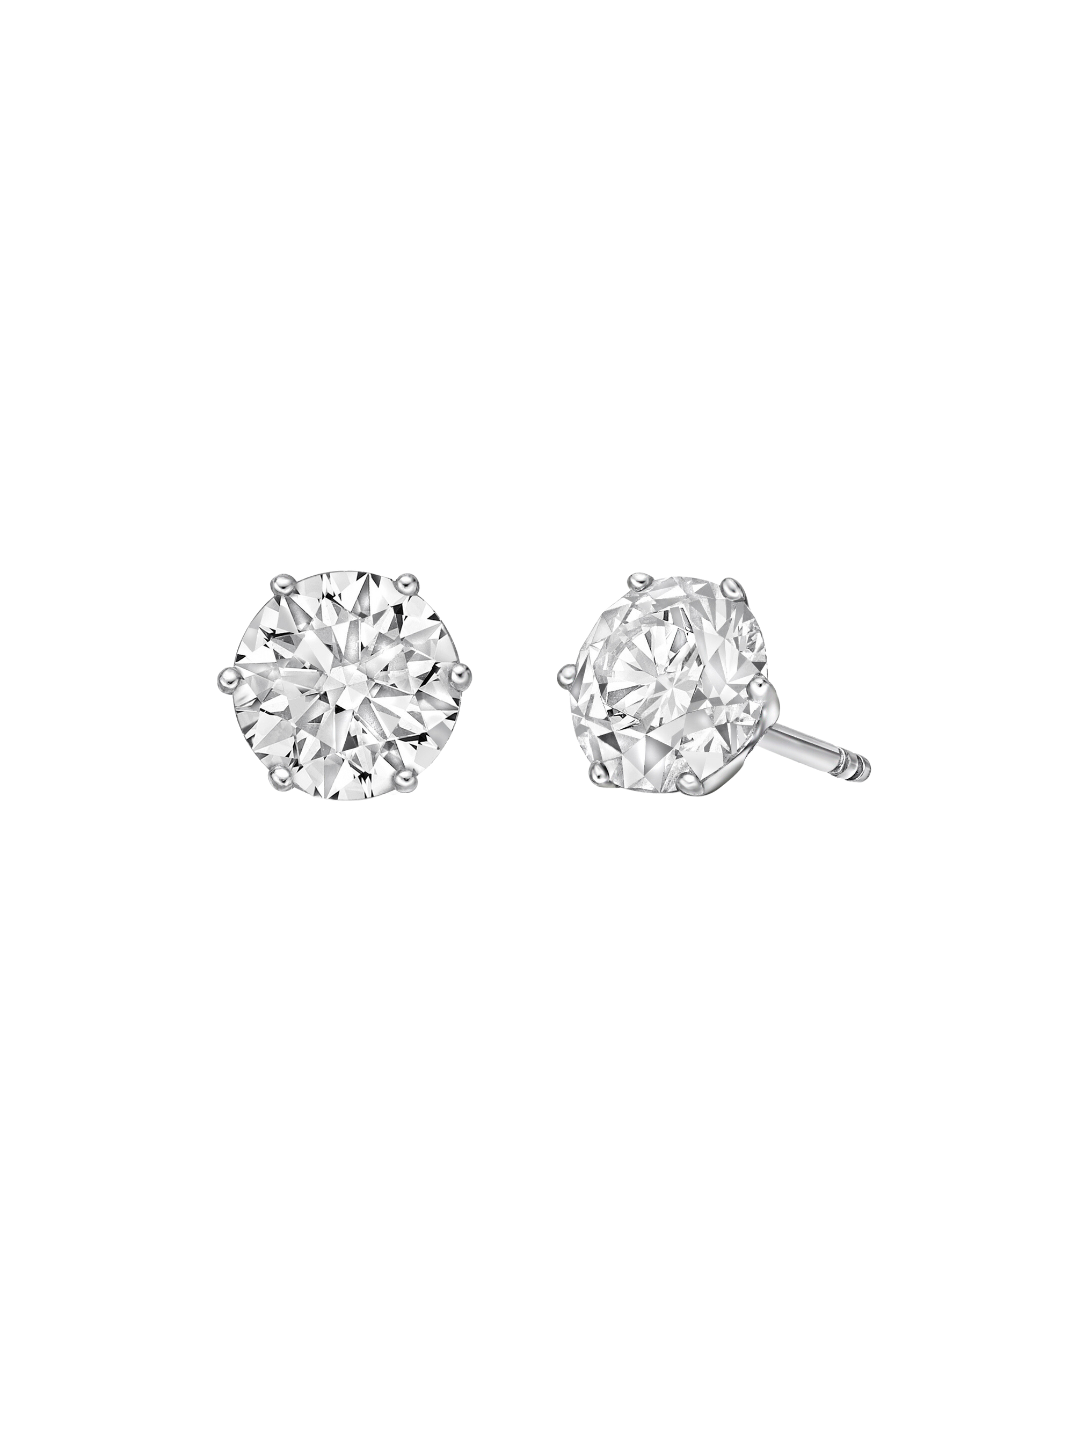 classic six prong diamond earrings women's jewelry fashion accessories